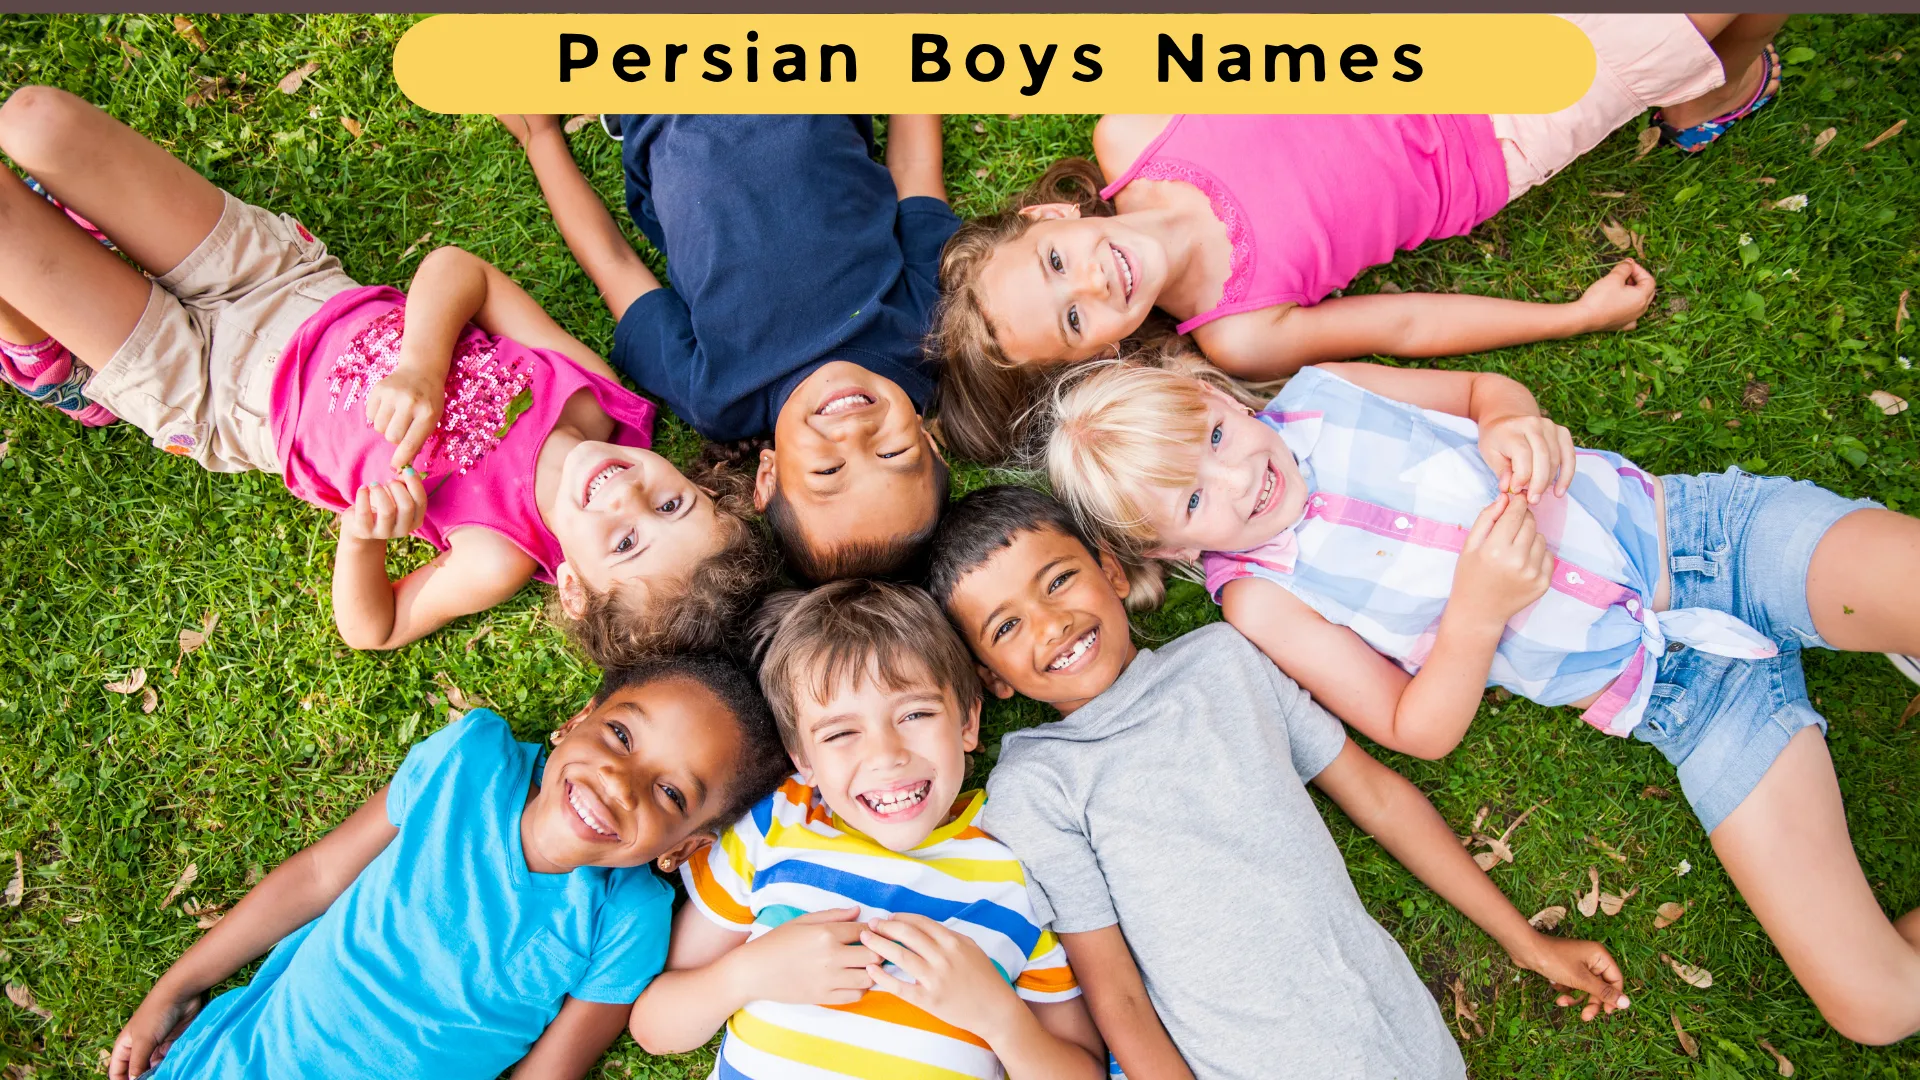 Persian Boys and girls enjoying on the grass